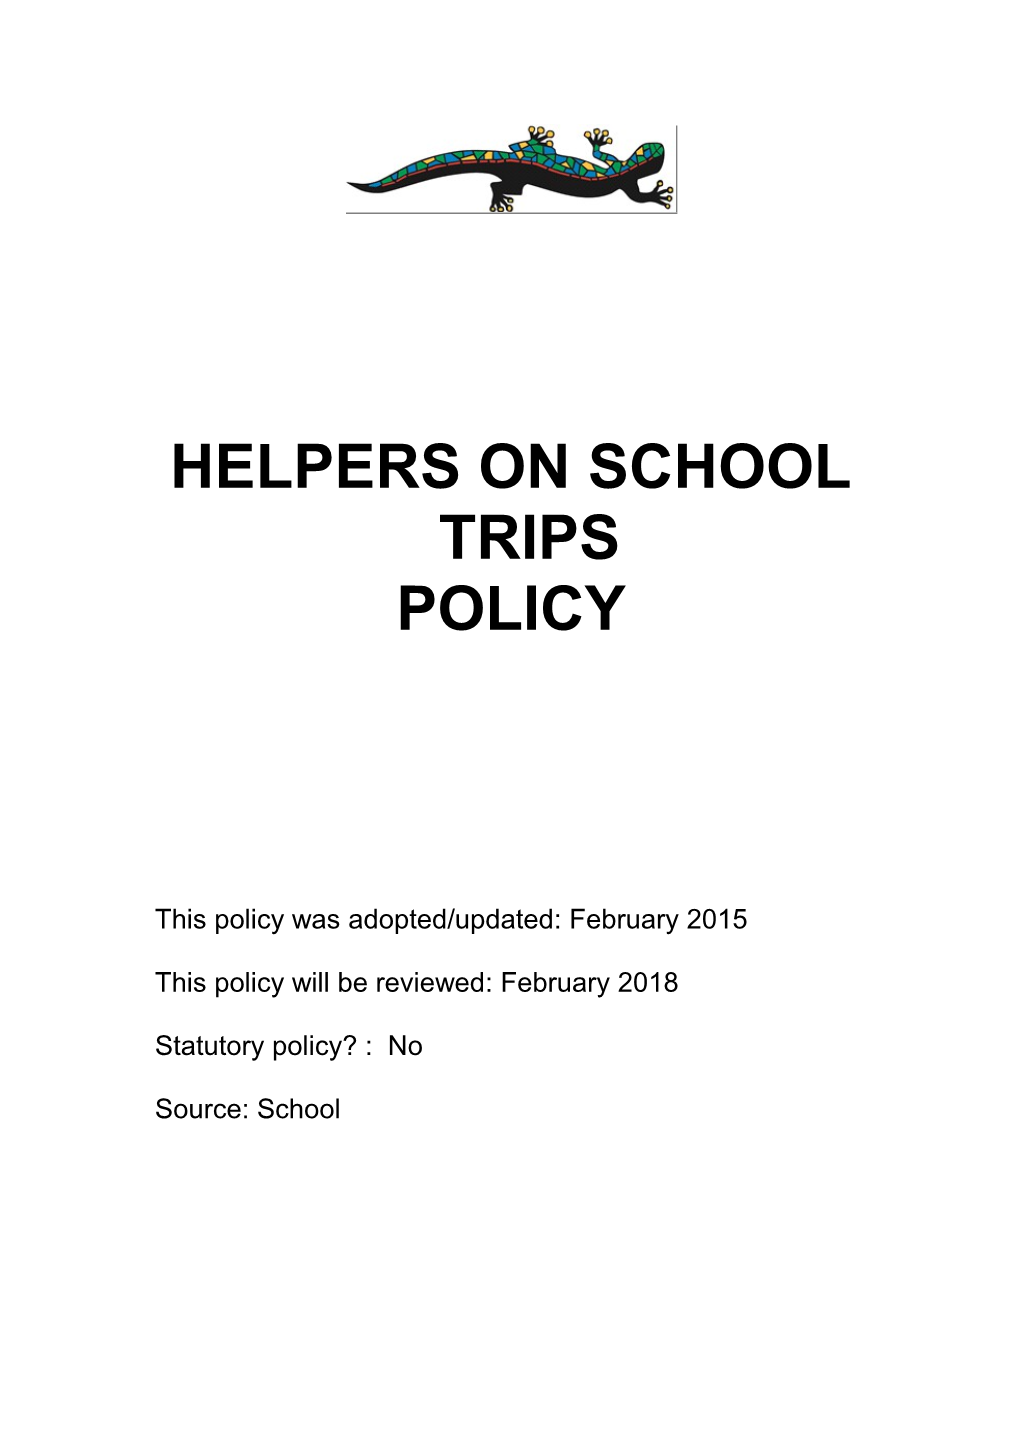 Hampton Wick Infant and Nursery School Policy